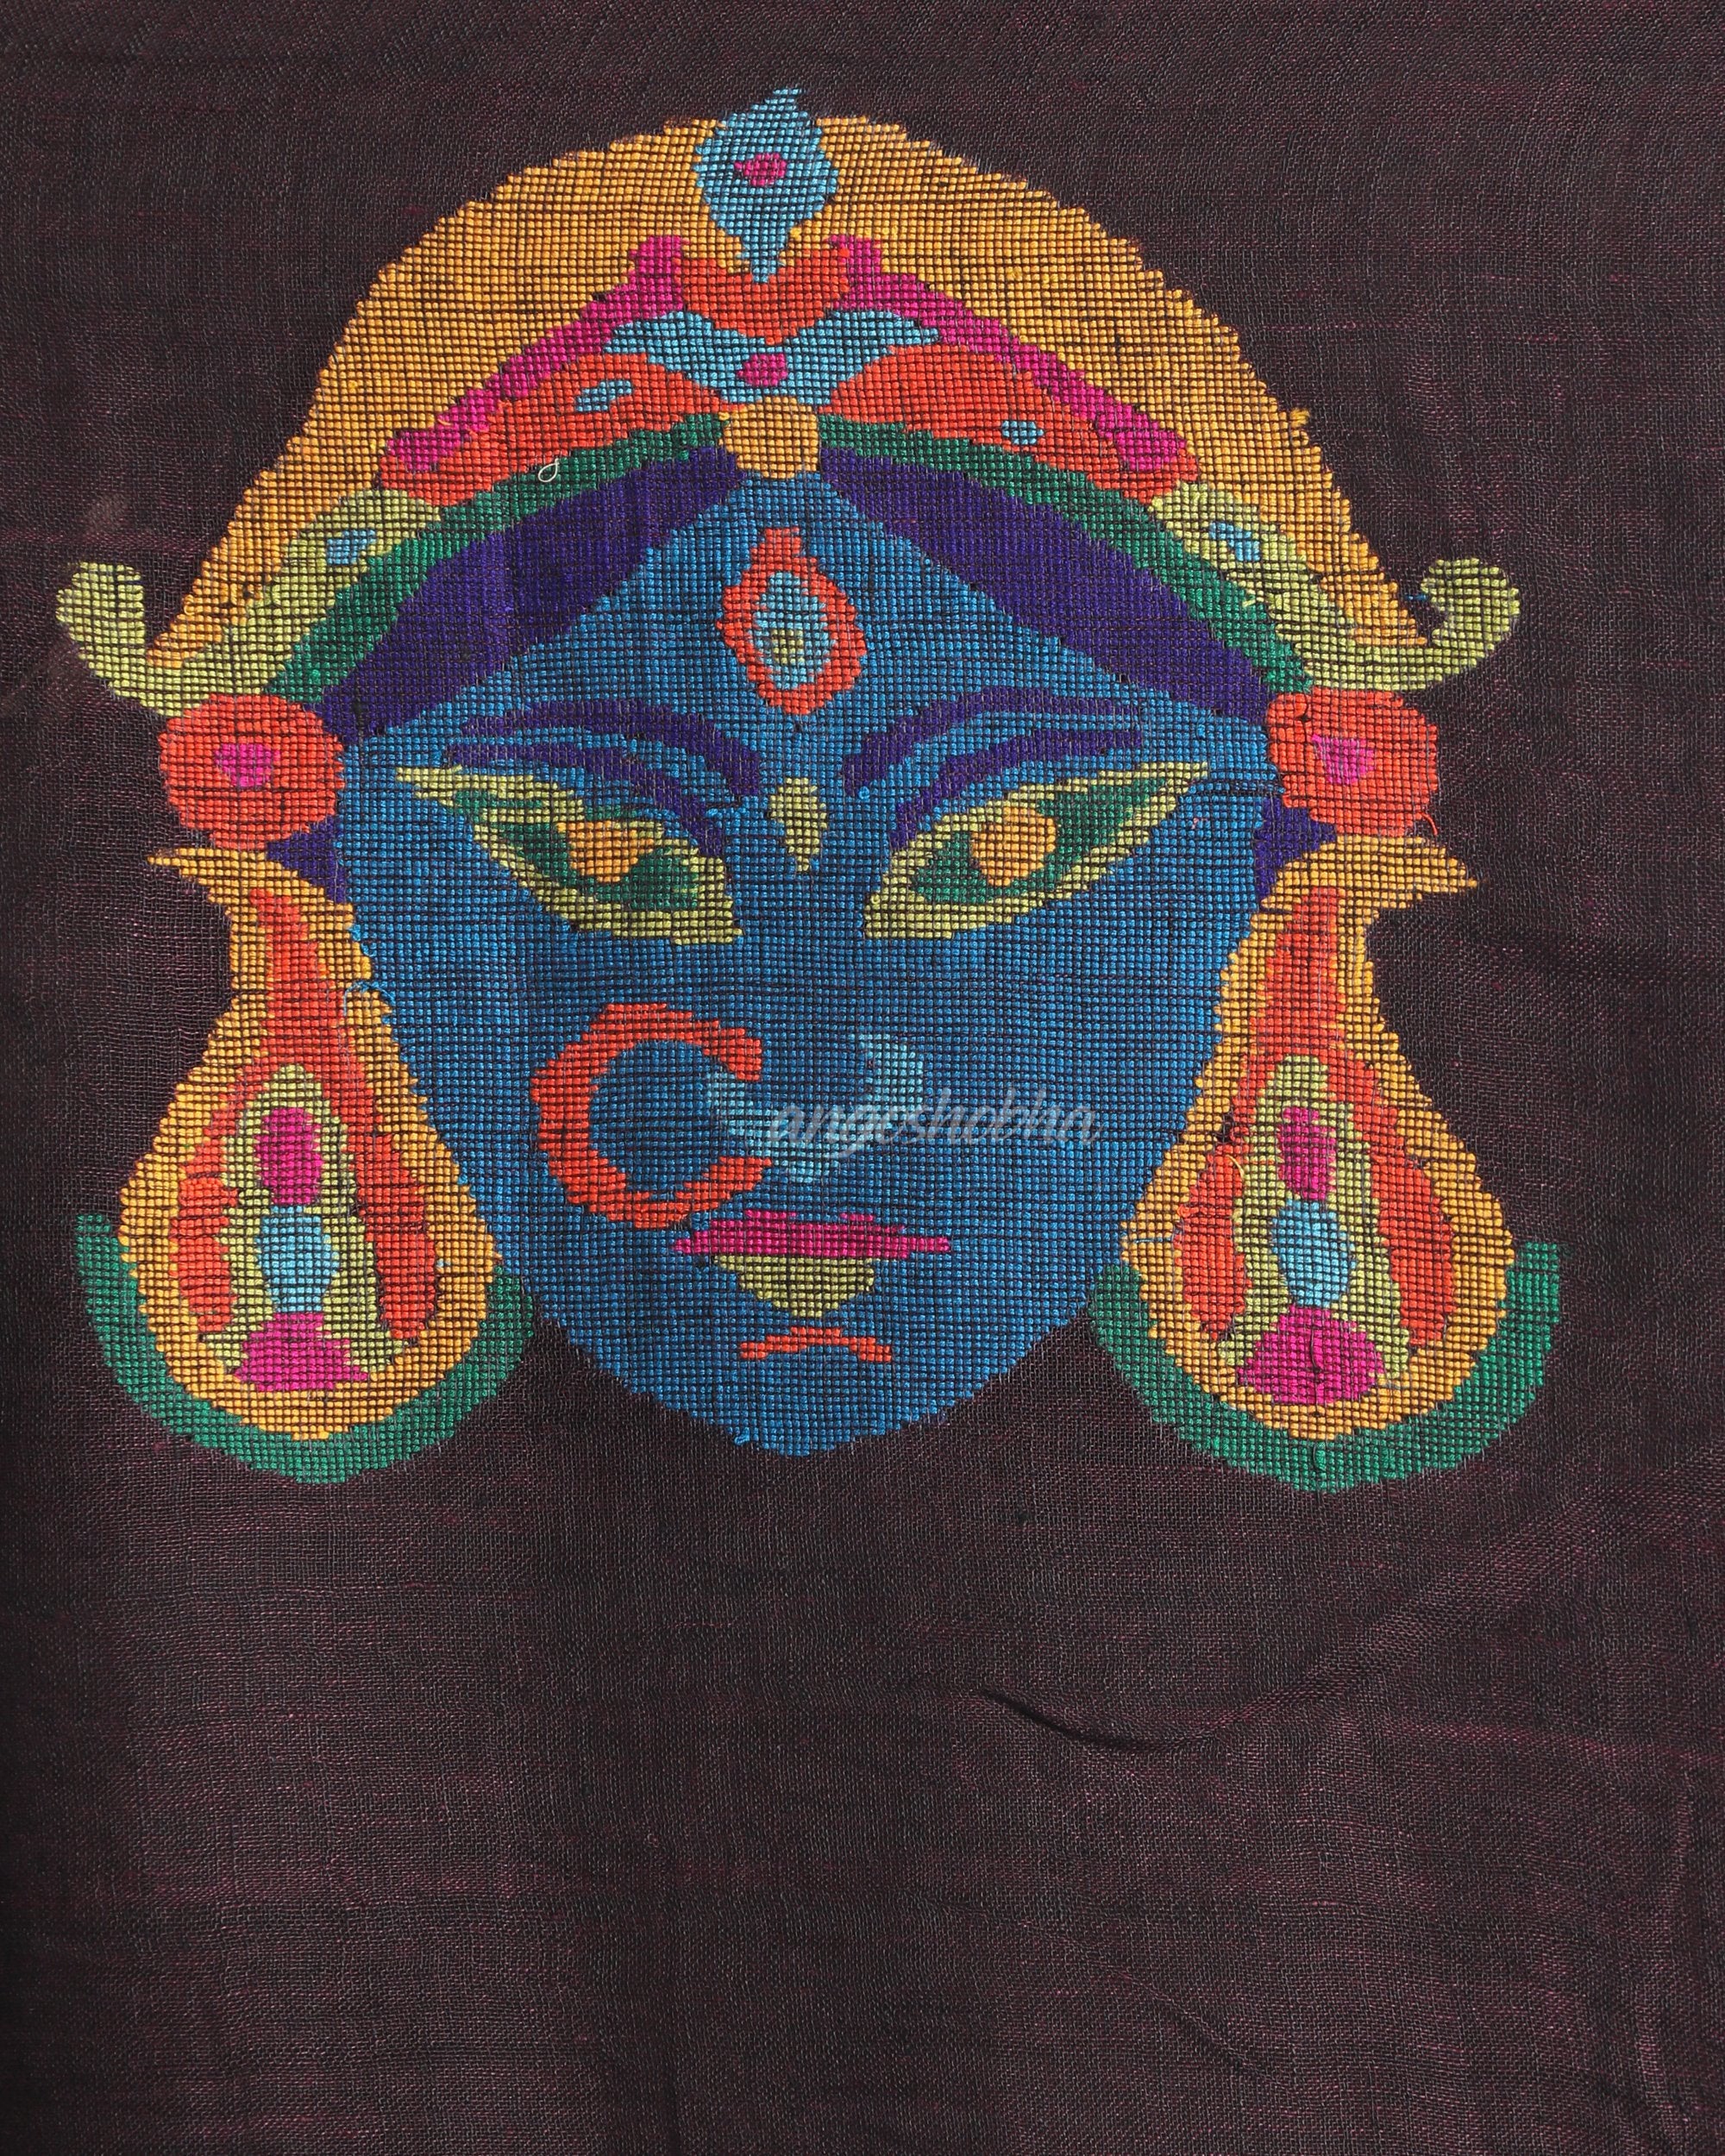 Women's Silver Jori Border Wine Linen Saree With Hand Weaving Pallu With With Unstitched Blouse - Angoshobha